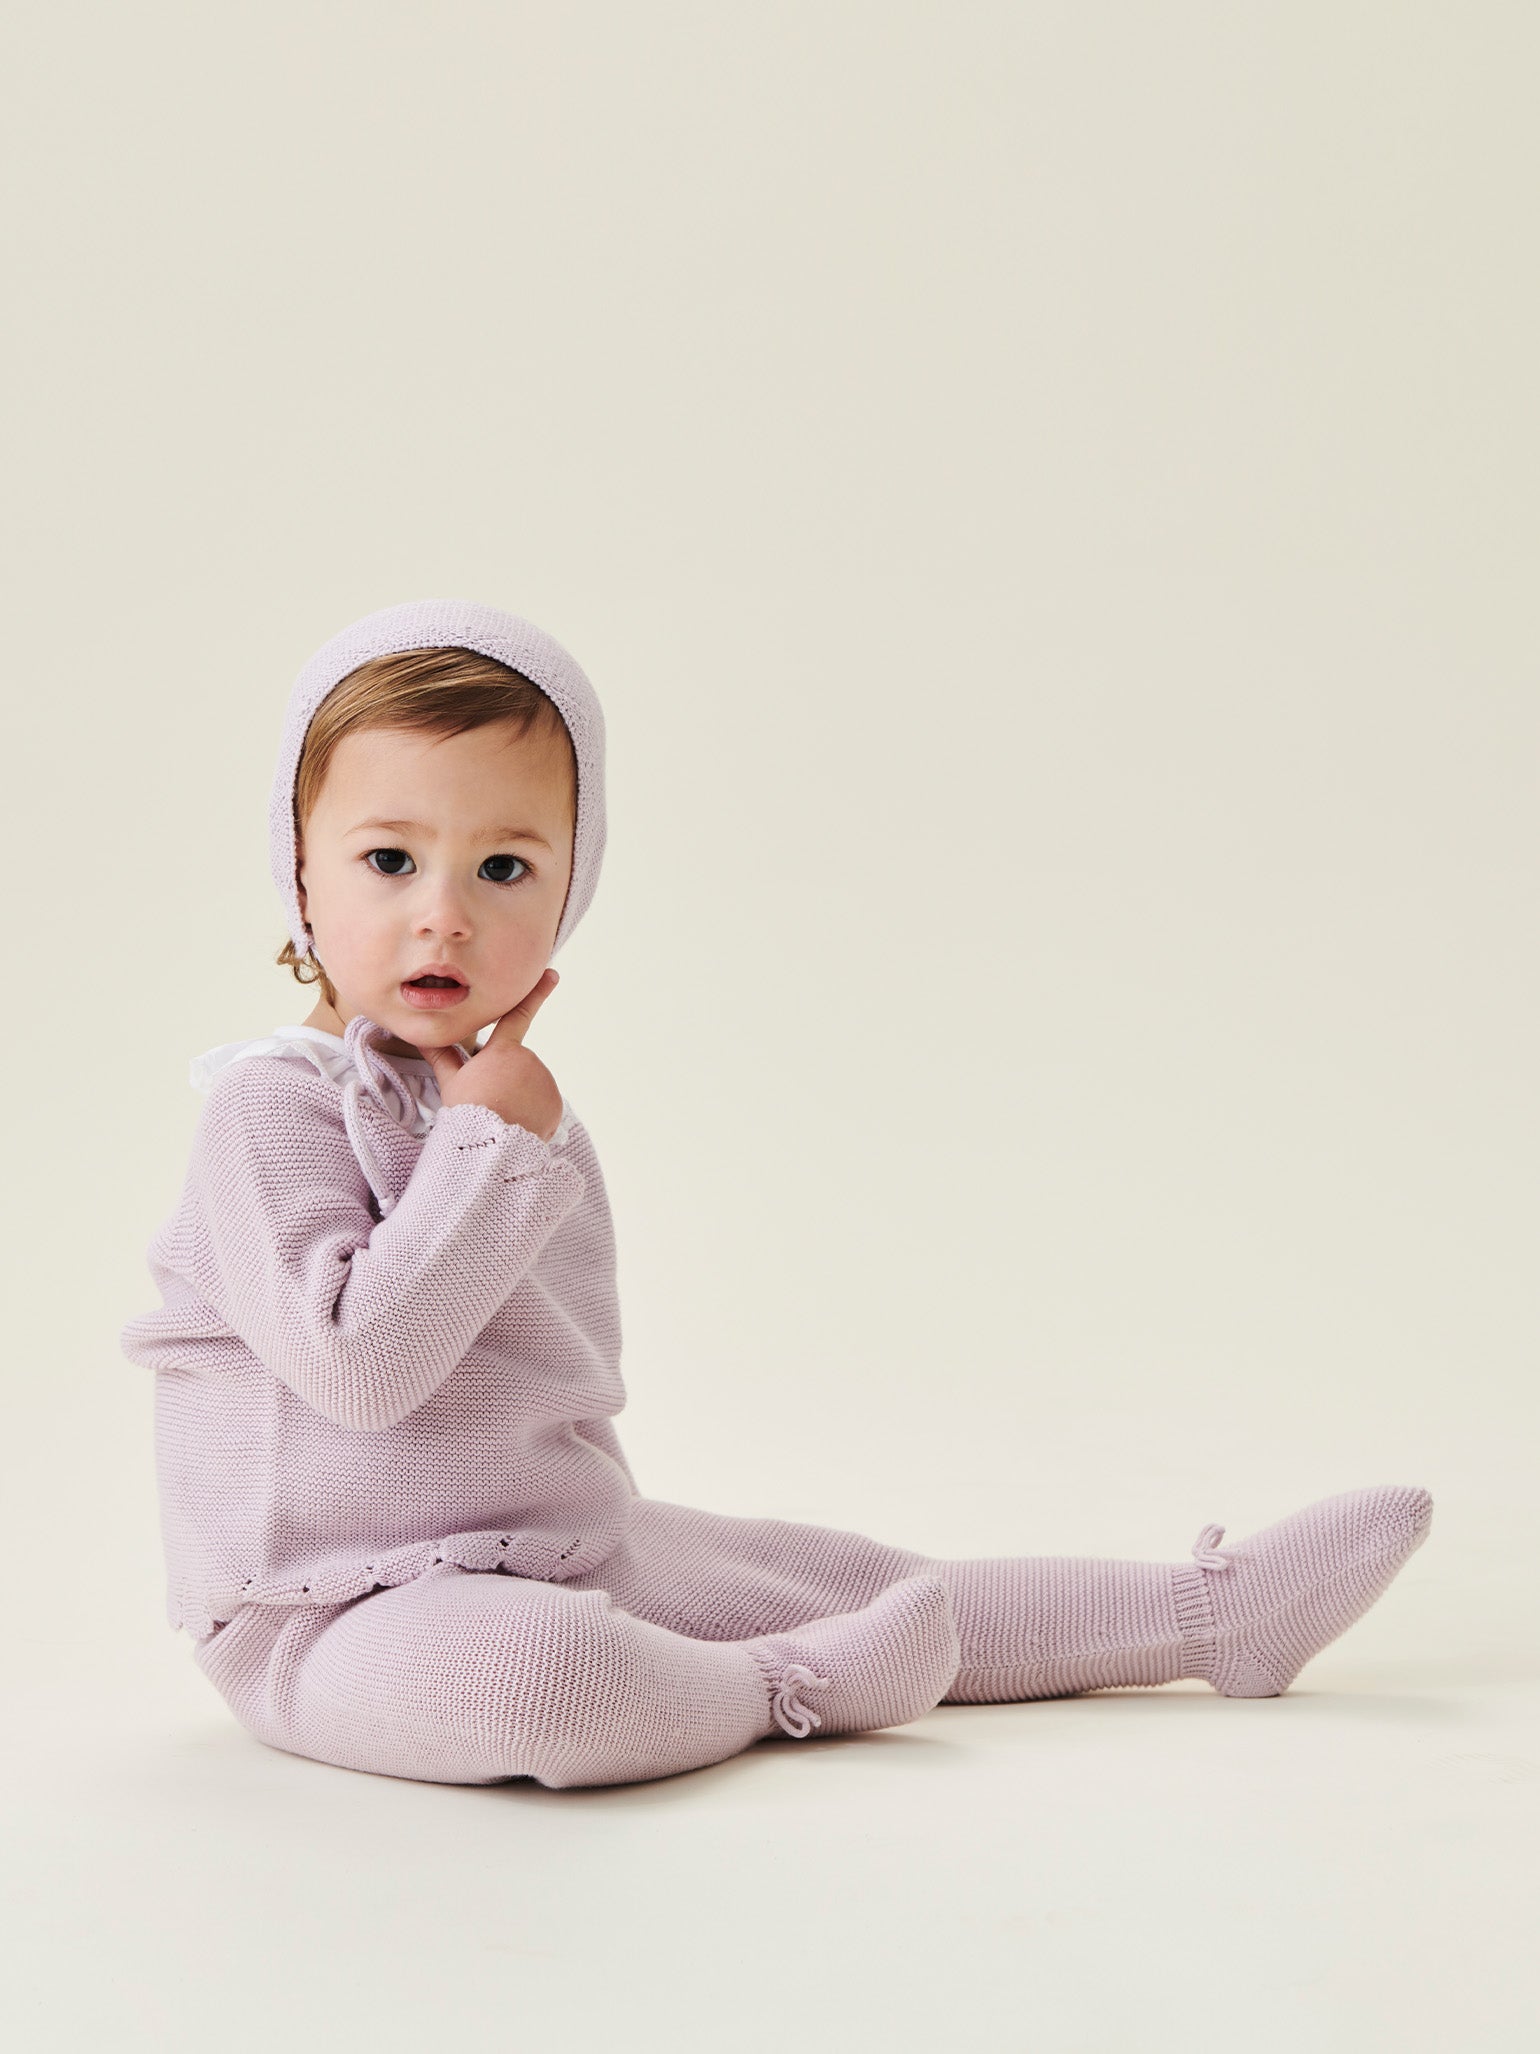 Lilac Claudeta Cotton Baby Girl Knitted Gift Box Set